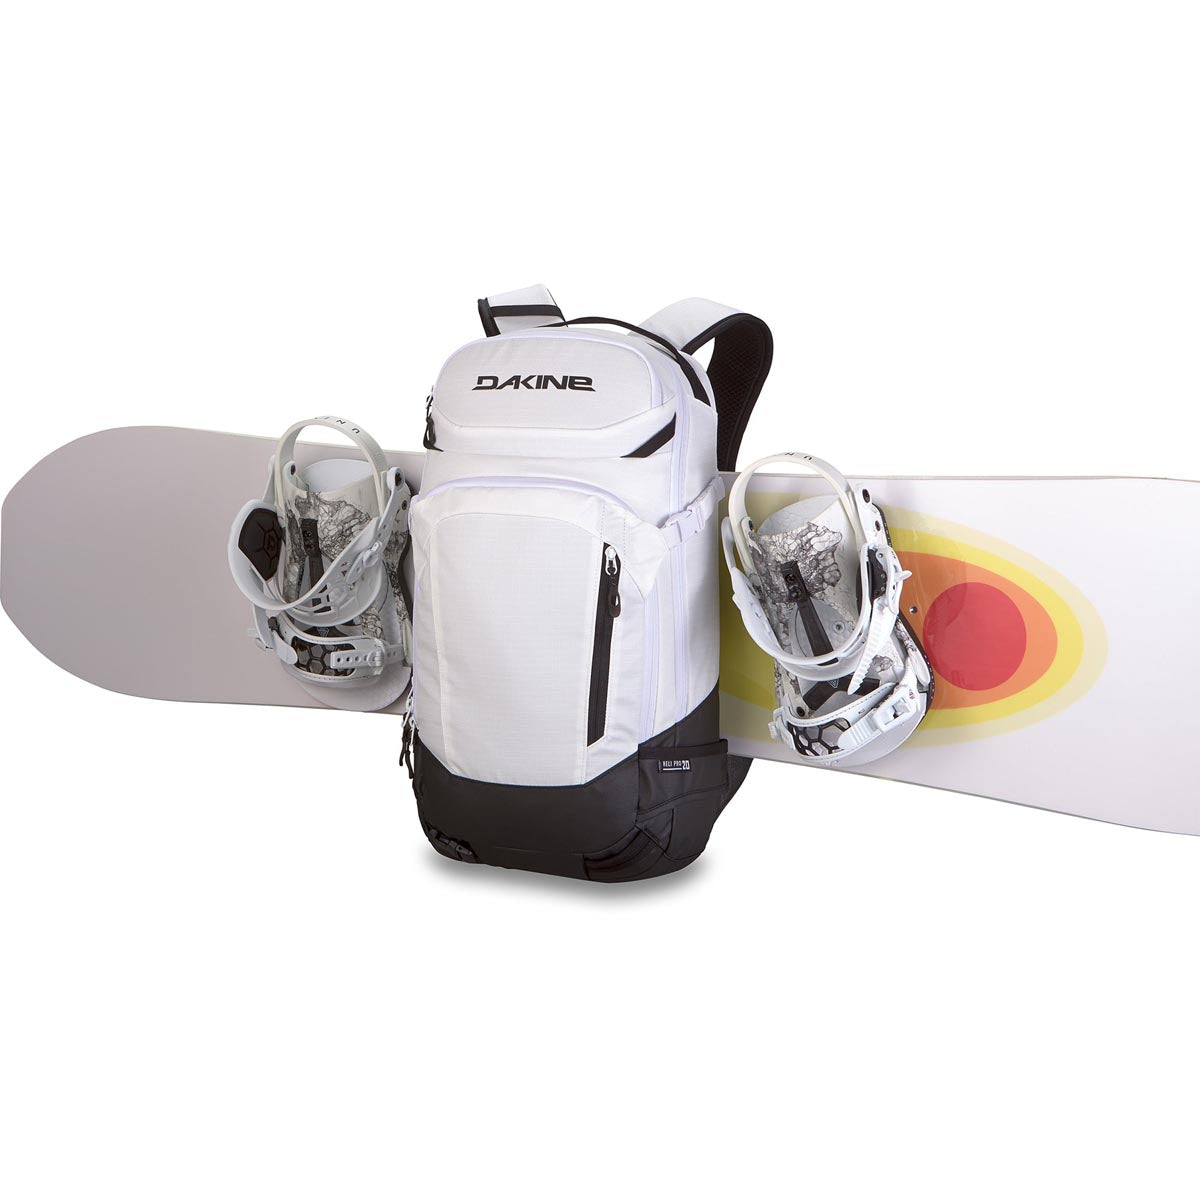 Dakine Heli Pro 20l Backpack - Painted Canyon image 4